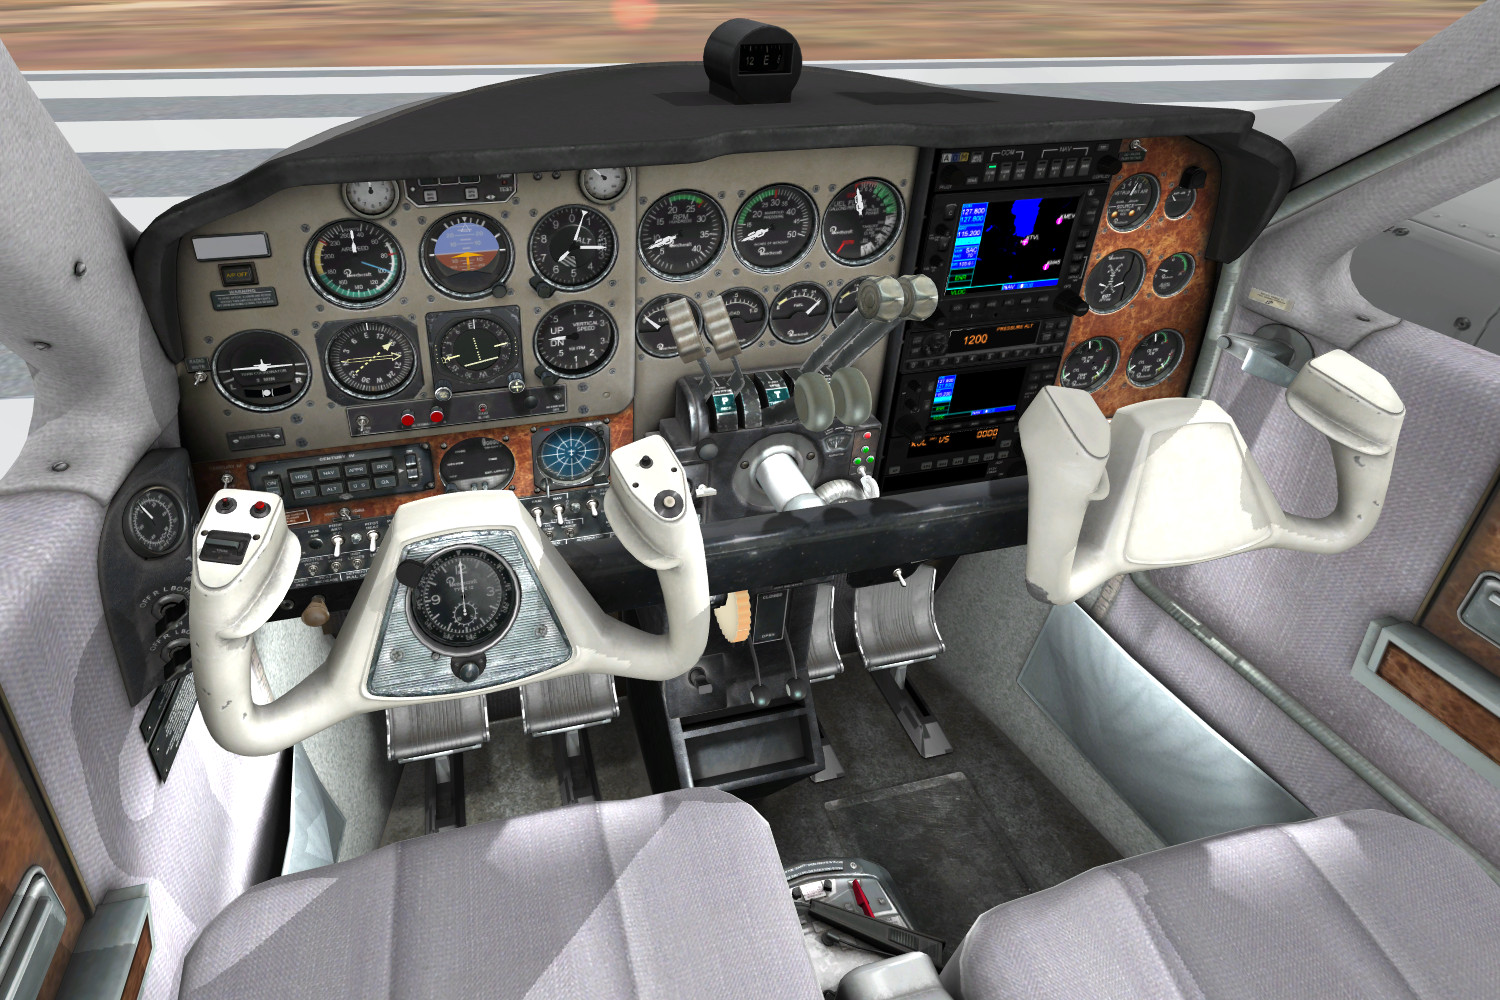 vr flight simulator game